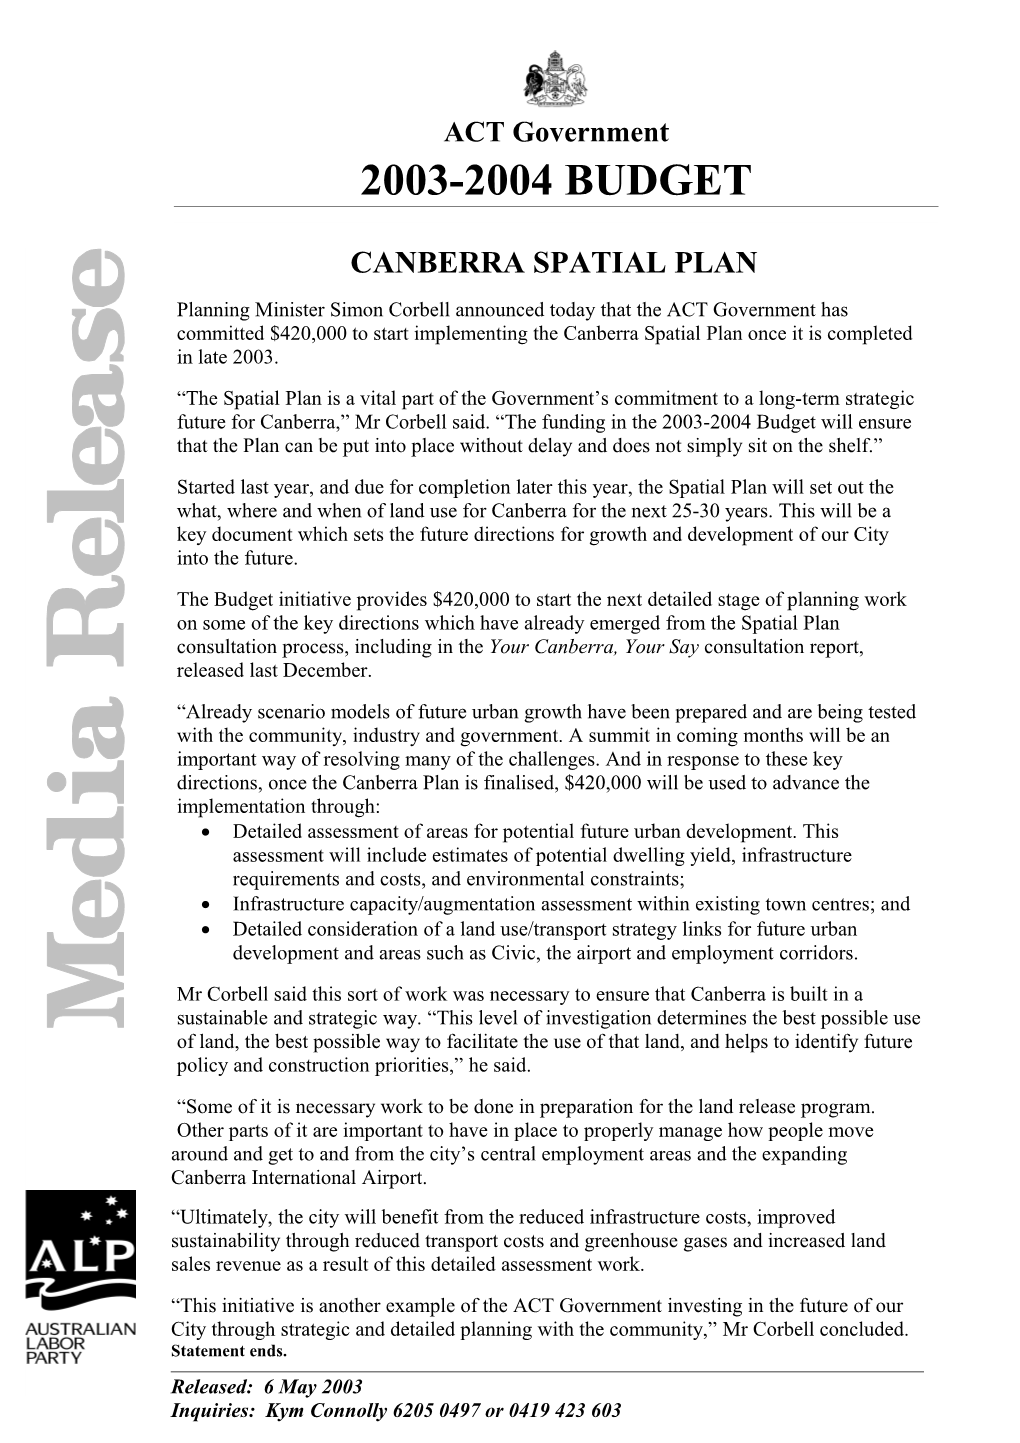 Media Release: CANBERRA SPATIAL PLAN